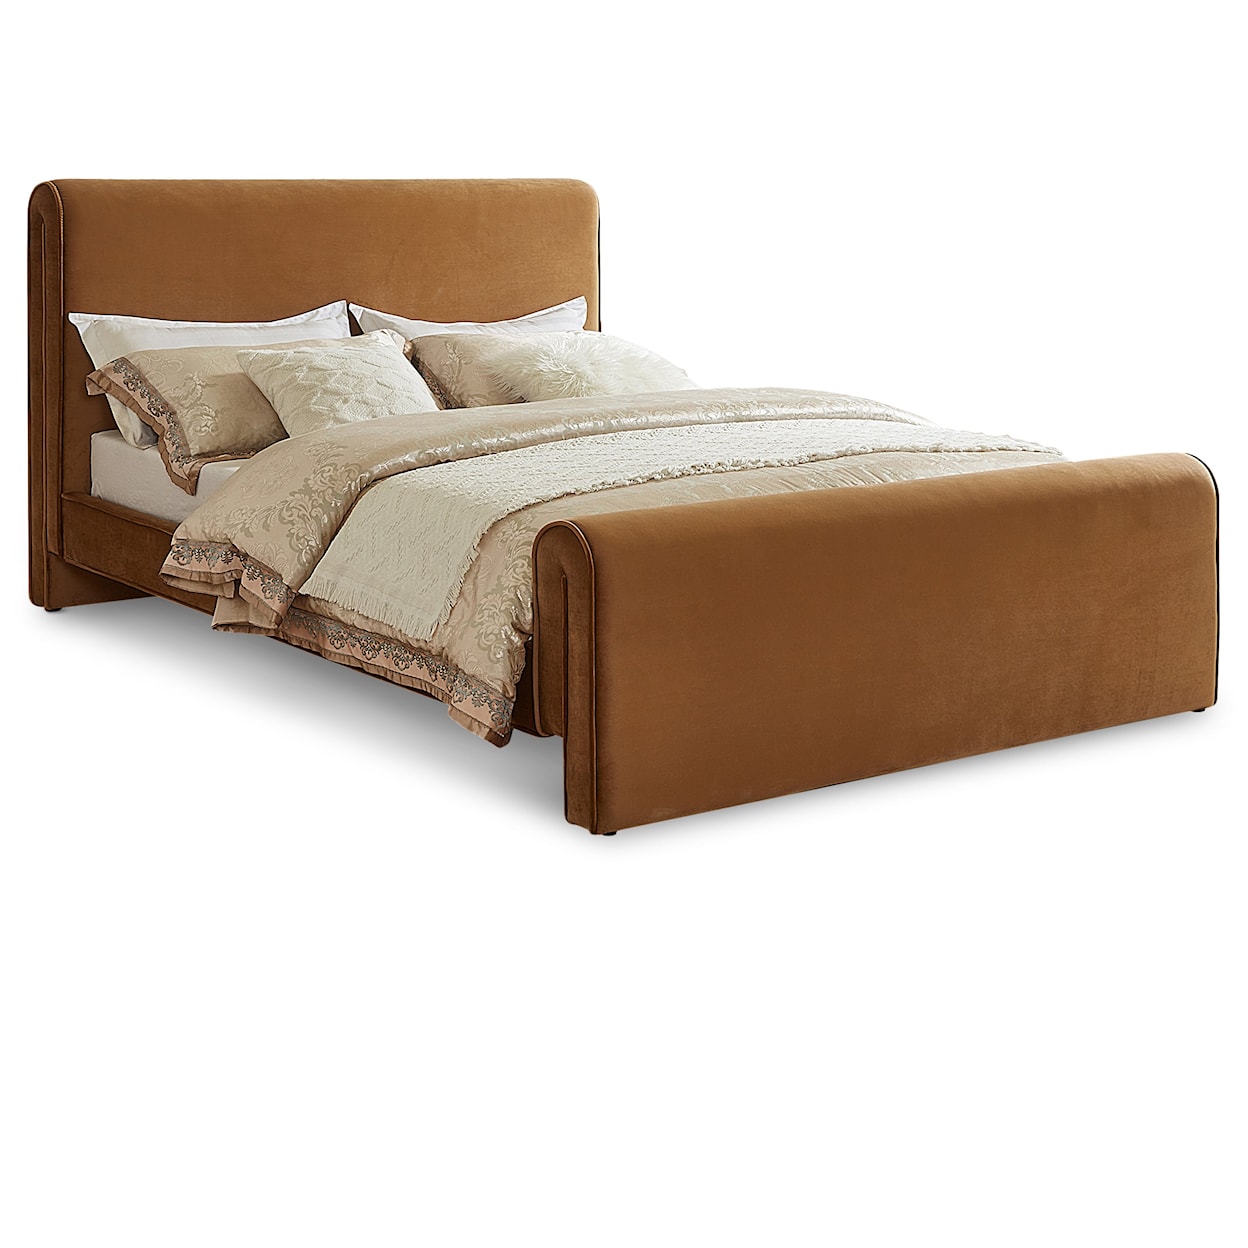 Meridian Furniture Sloan Full Bed (3 Boxes)